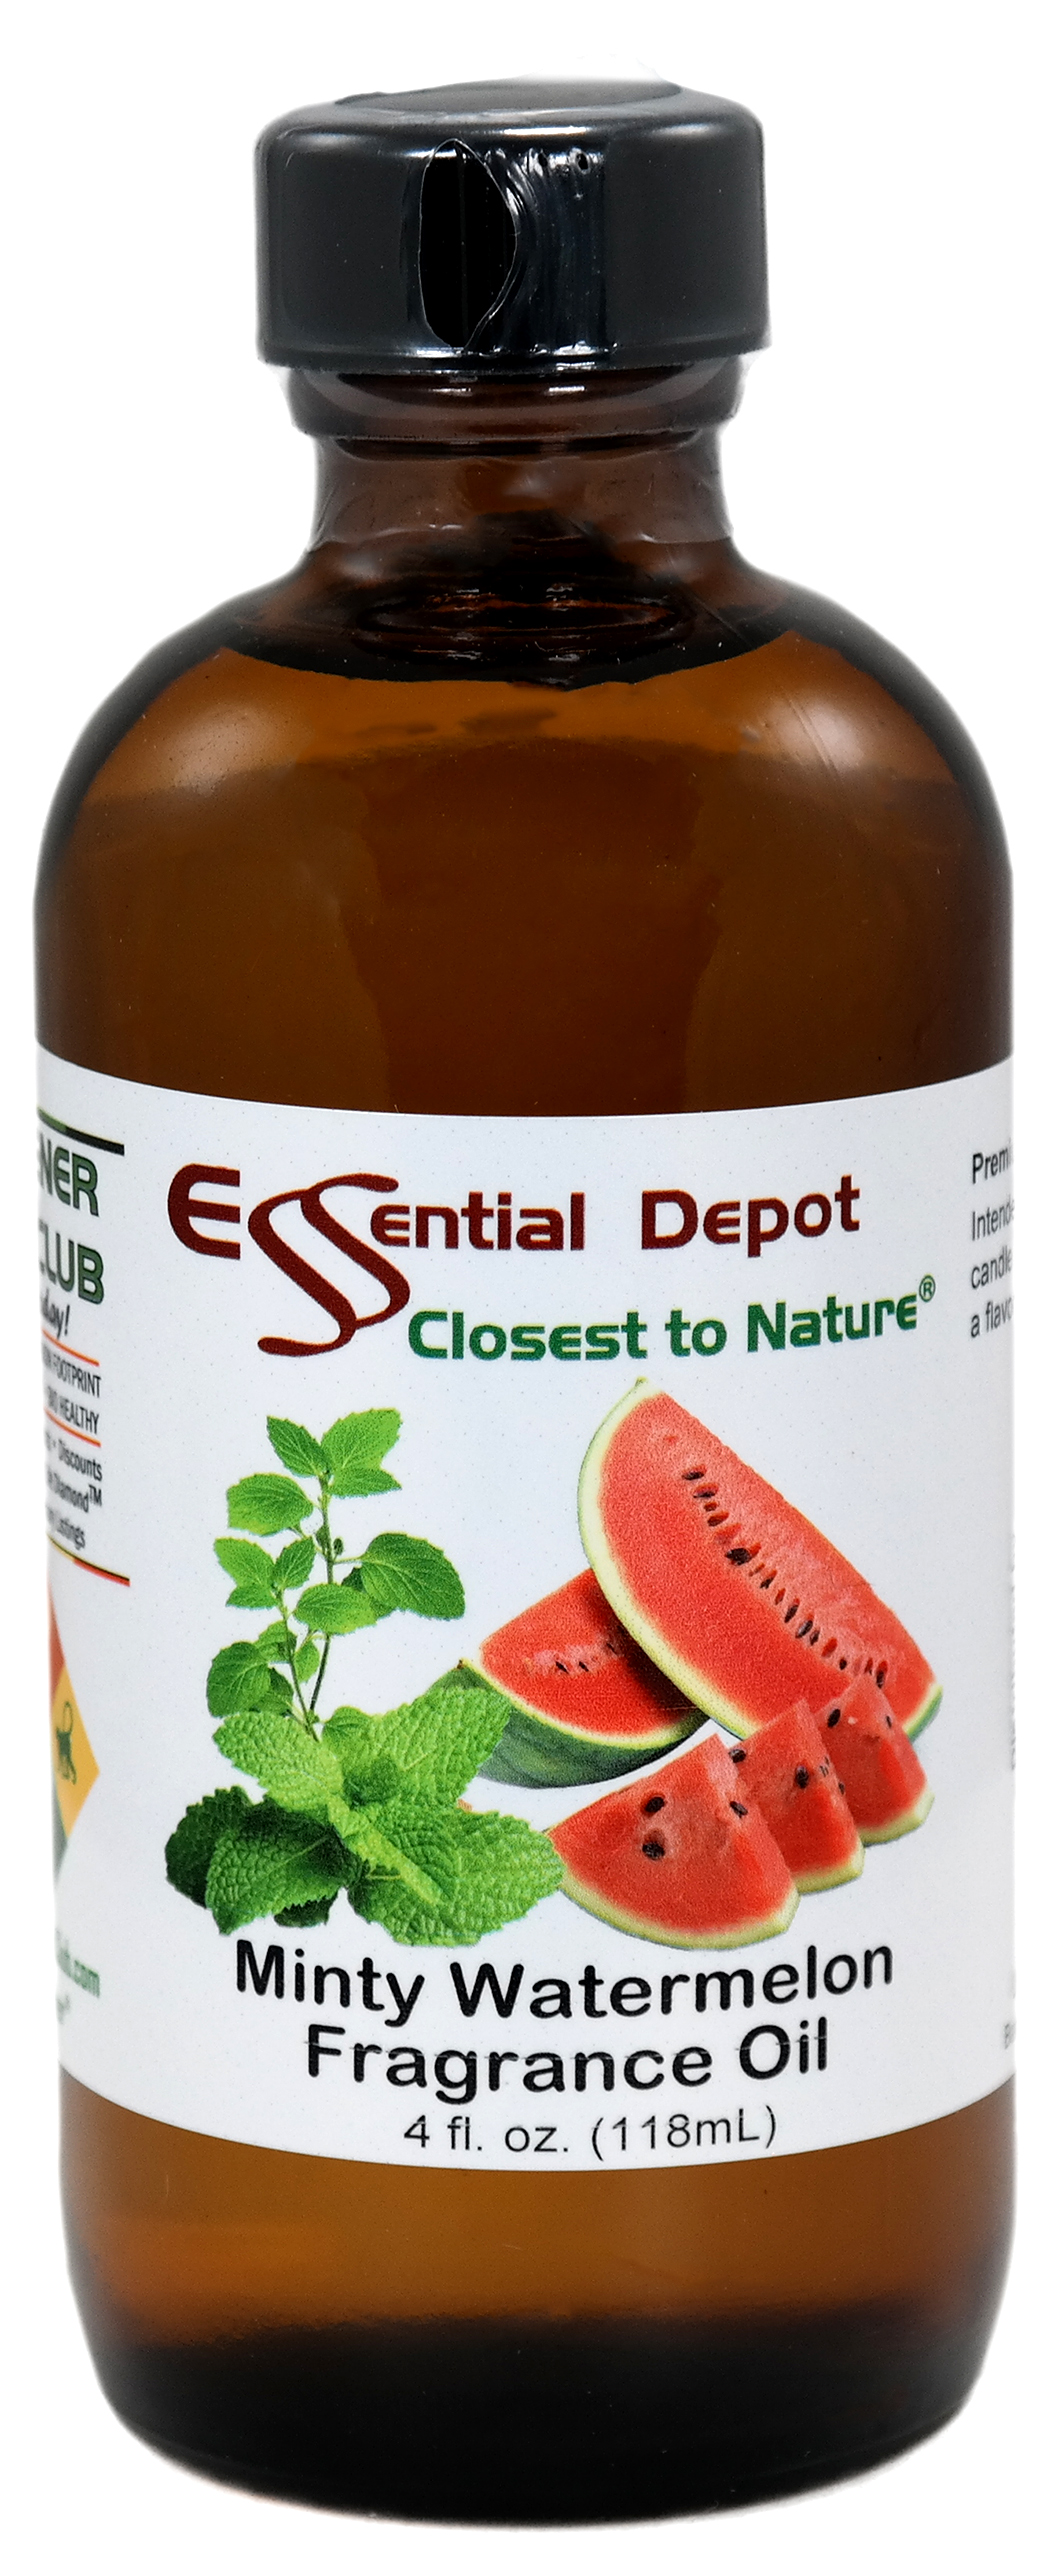 Minty Watermelon Fragrance Oil - 4oz: Essential Depot